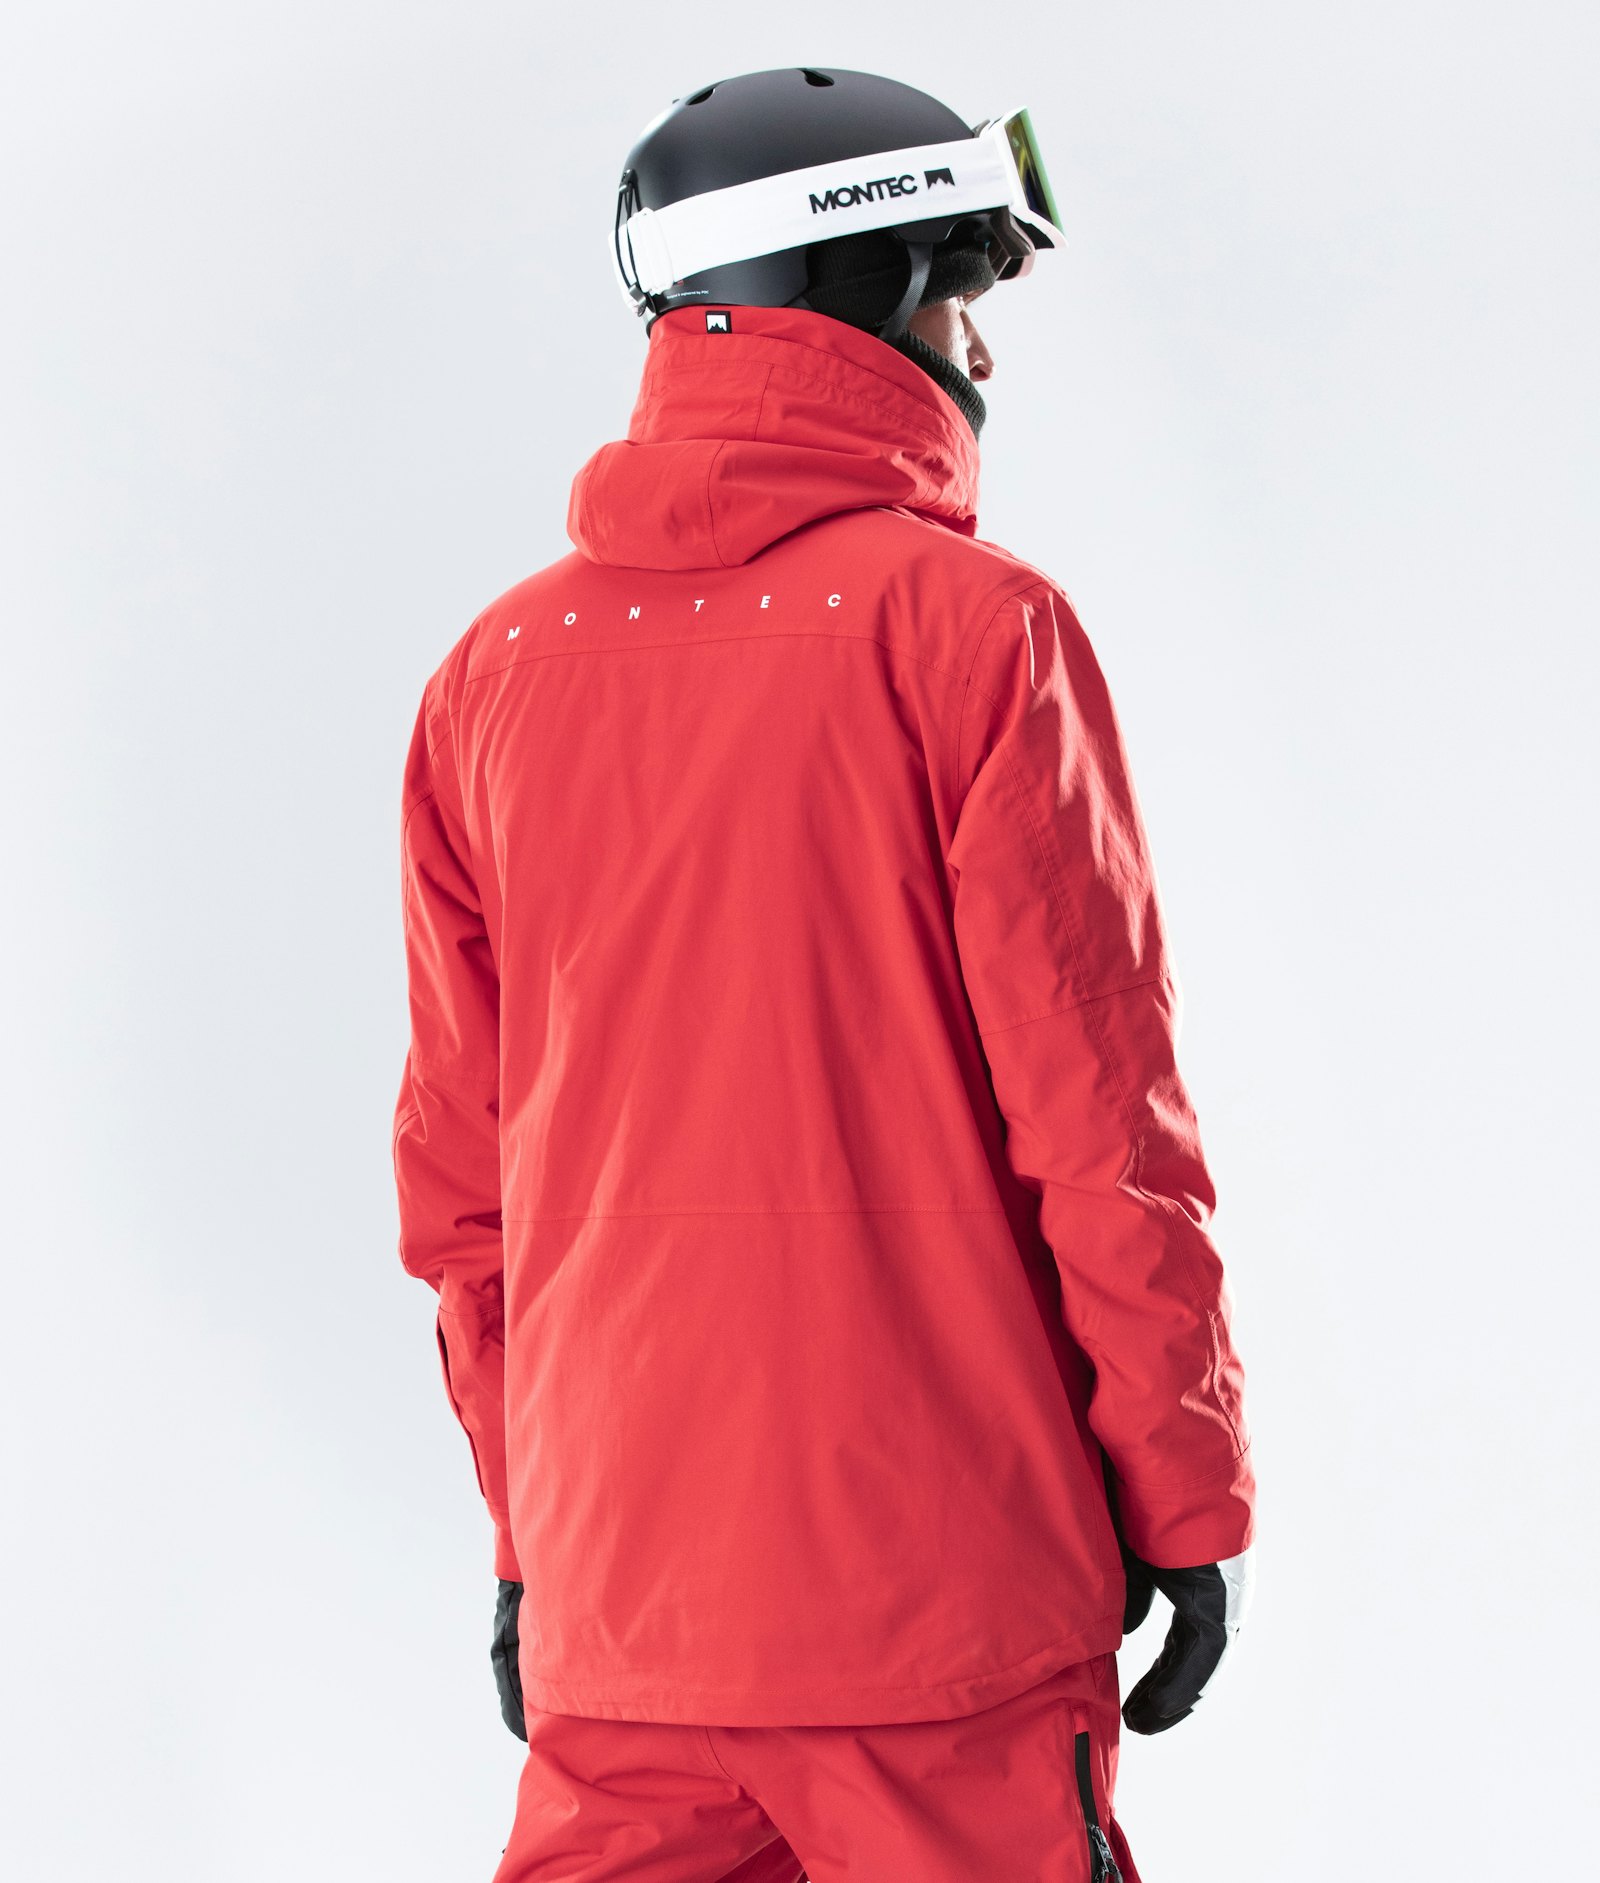 Fawk 2020 Veste Snowboard Homme Red Renewed